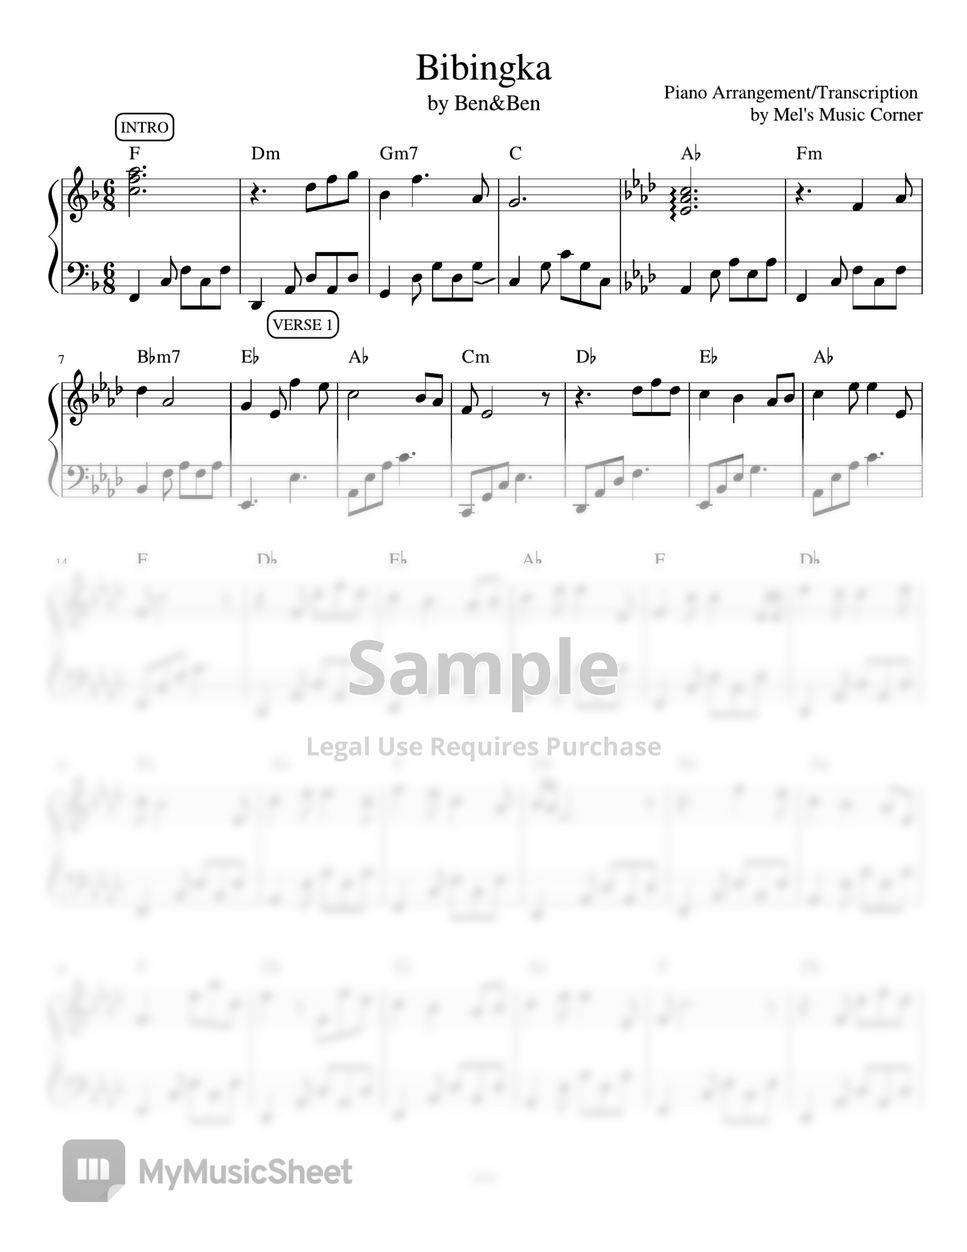 Ben&Ben - Bibingka (piano sheet music) by Mel's Music Corner